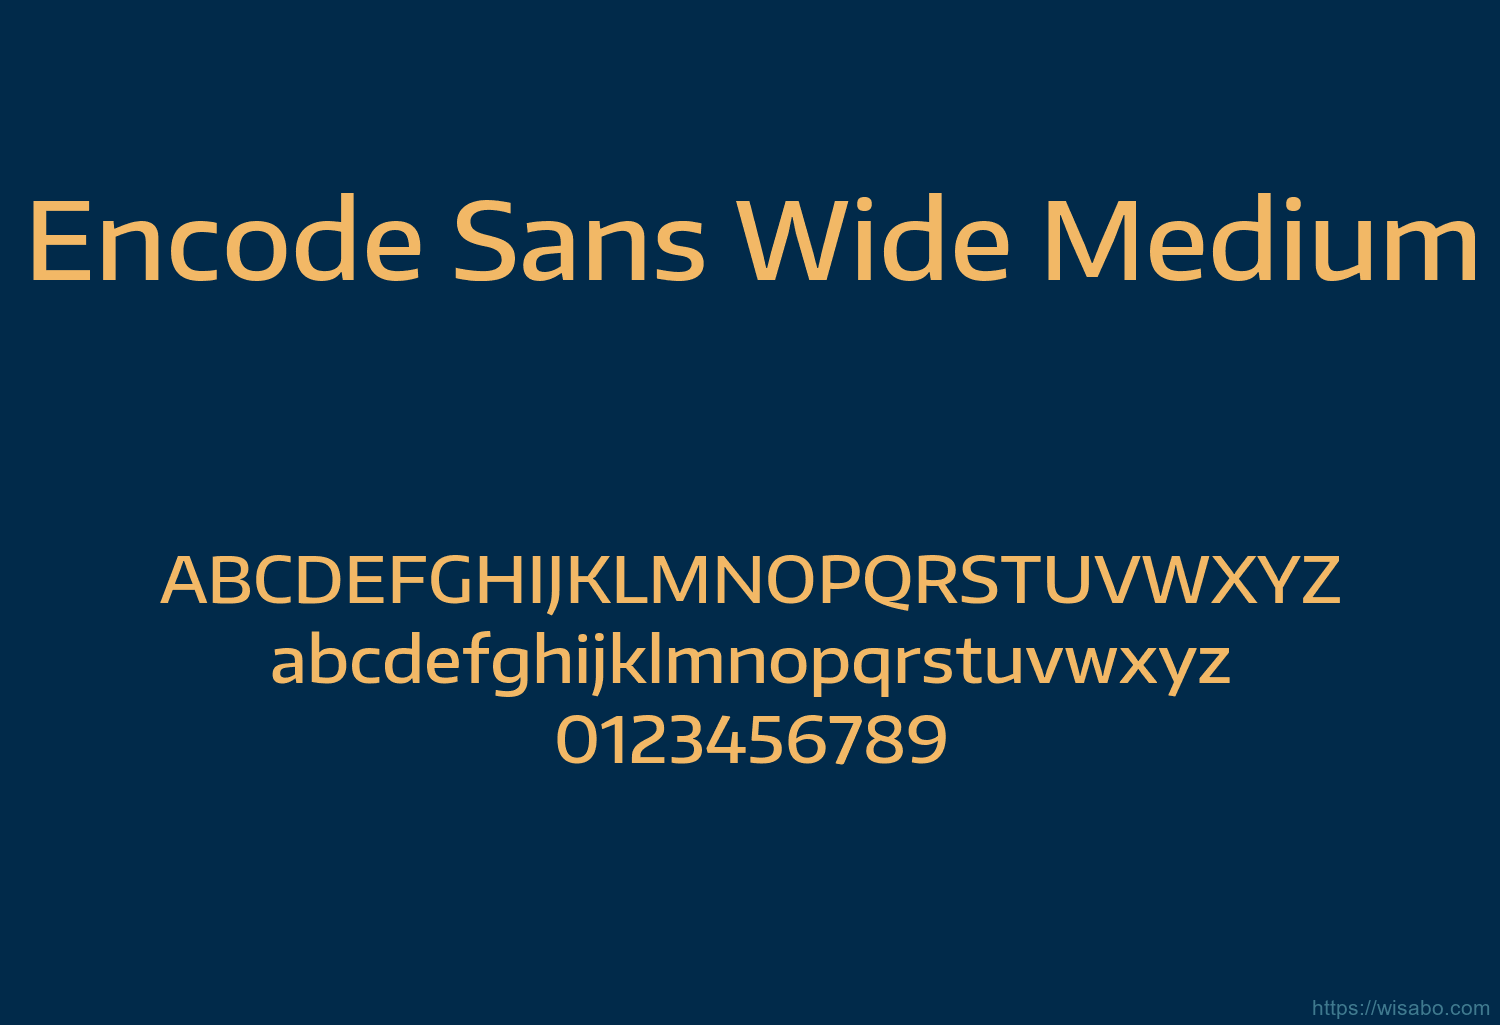 Encode Sans Wide Medium